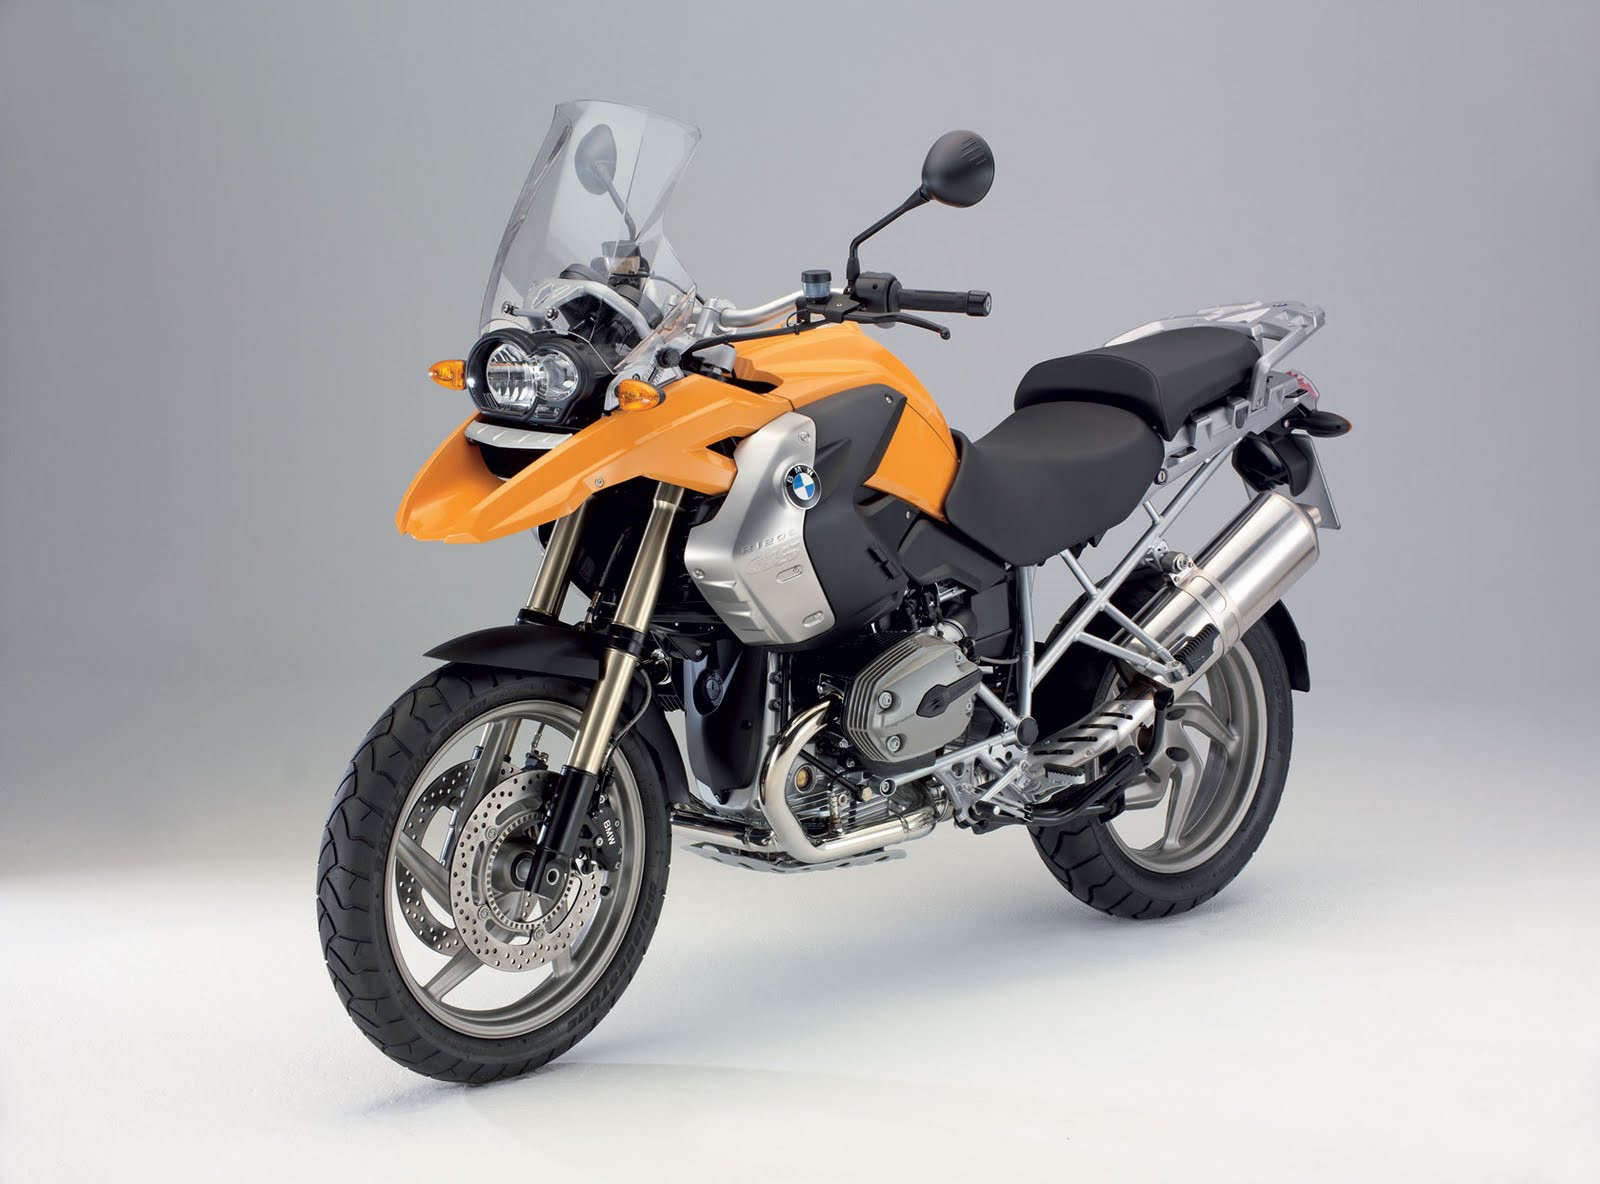 MOTORCYCLE BMW R1200GS Rider Honda Motorcycles Trend Mode Motorbike